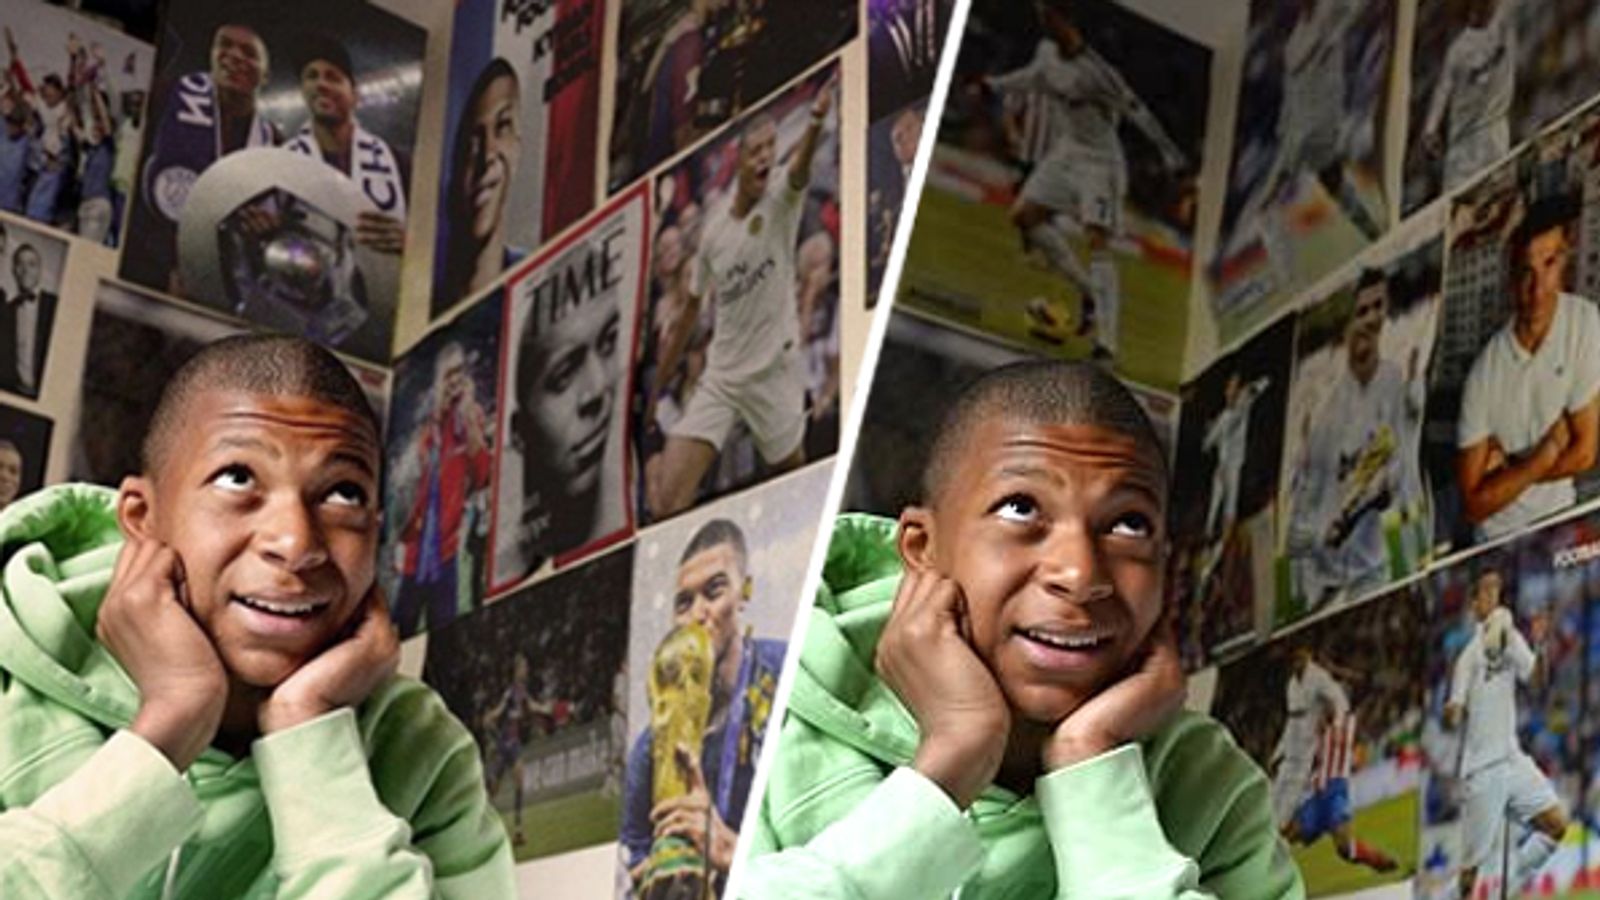 Mbappe ersetzt Ronaldo-Poster mit eigenen | Fußball News ...